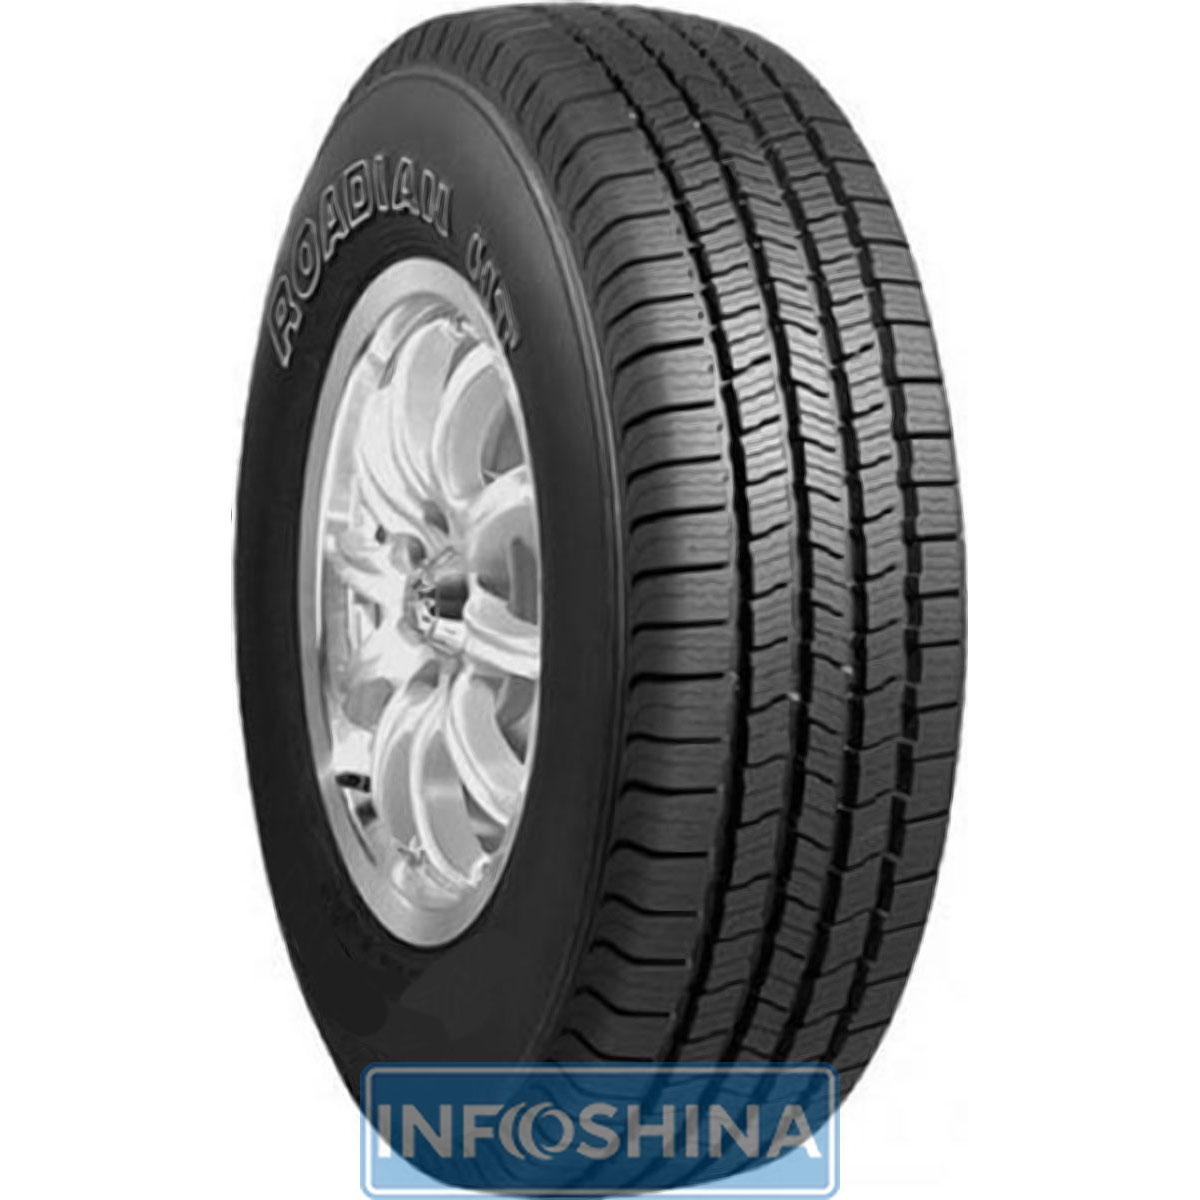 Купить шины Roadstone Roadian H/T LTV 30/9.5 R15 104S